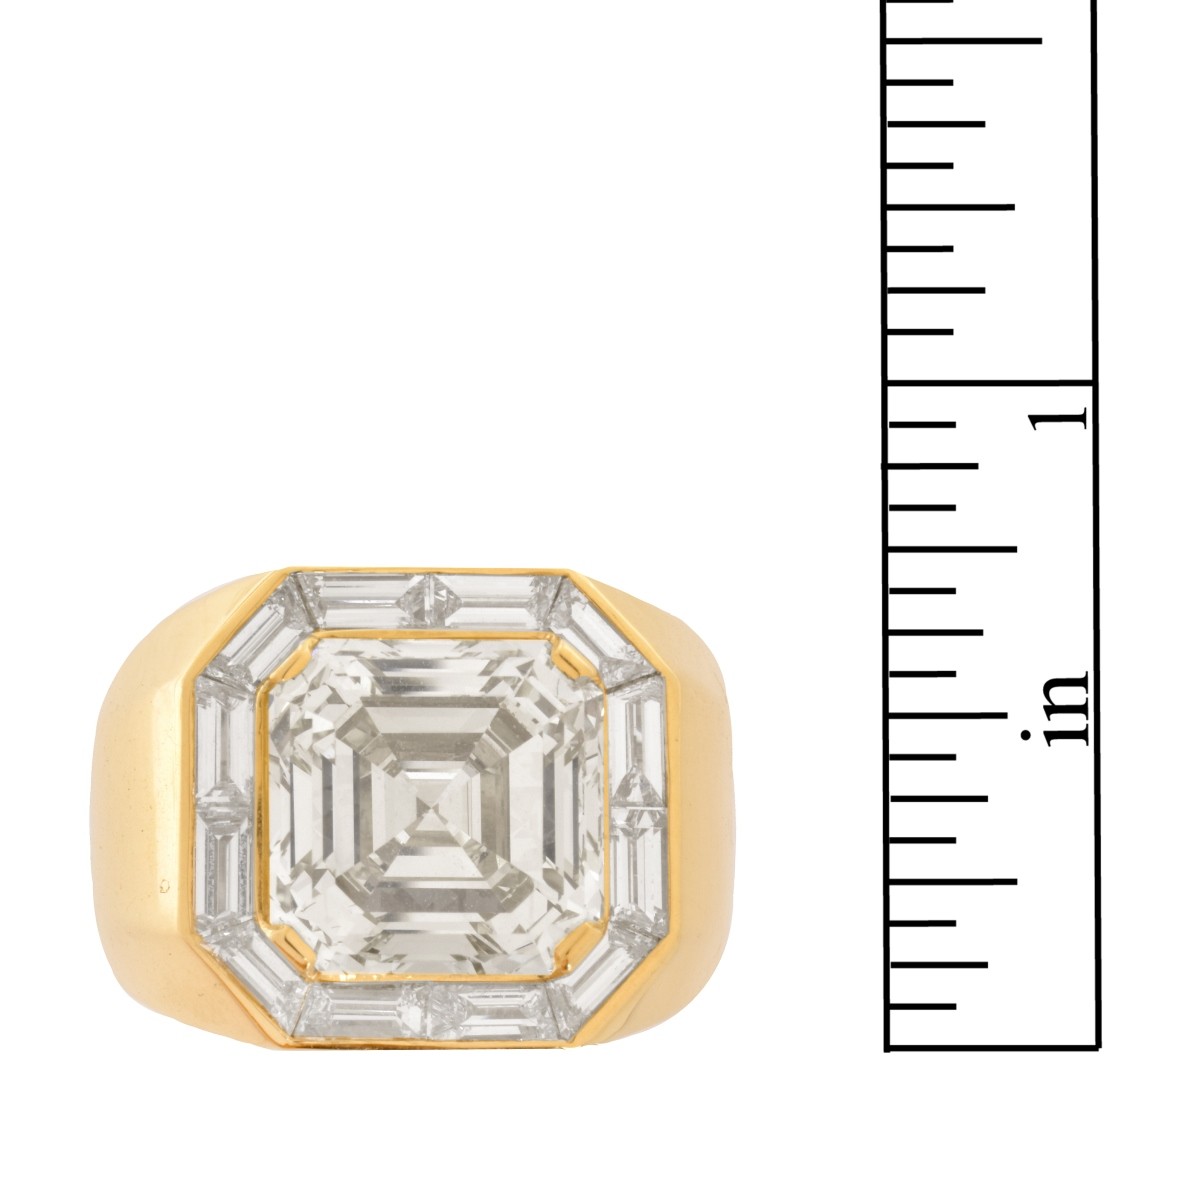 Man's 13.57 Carat Diamond and 18K Ring